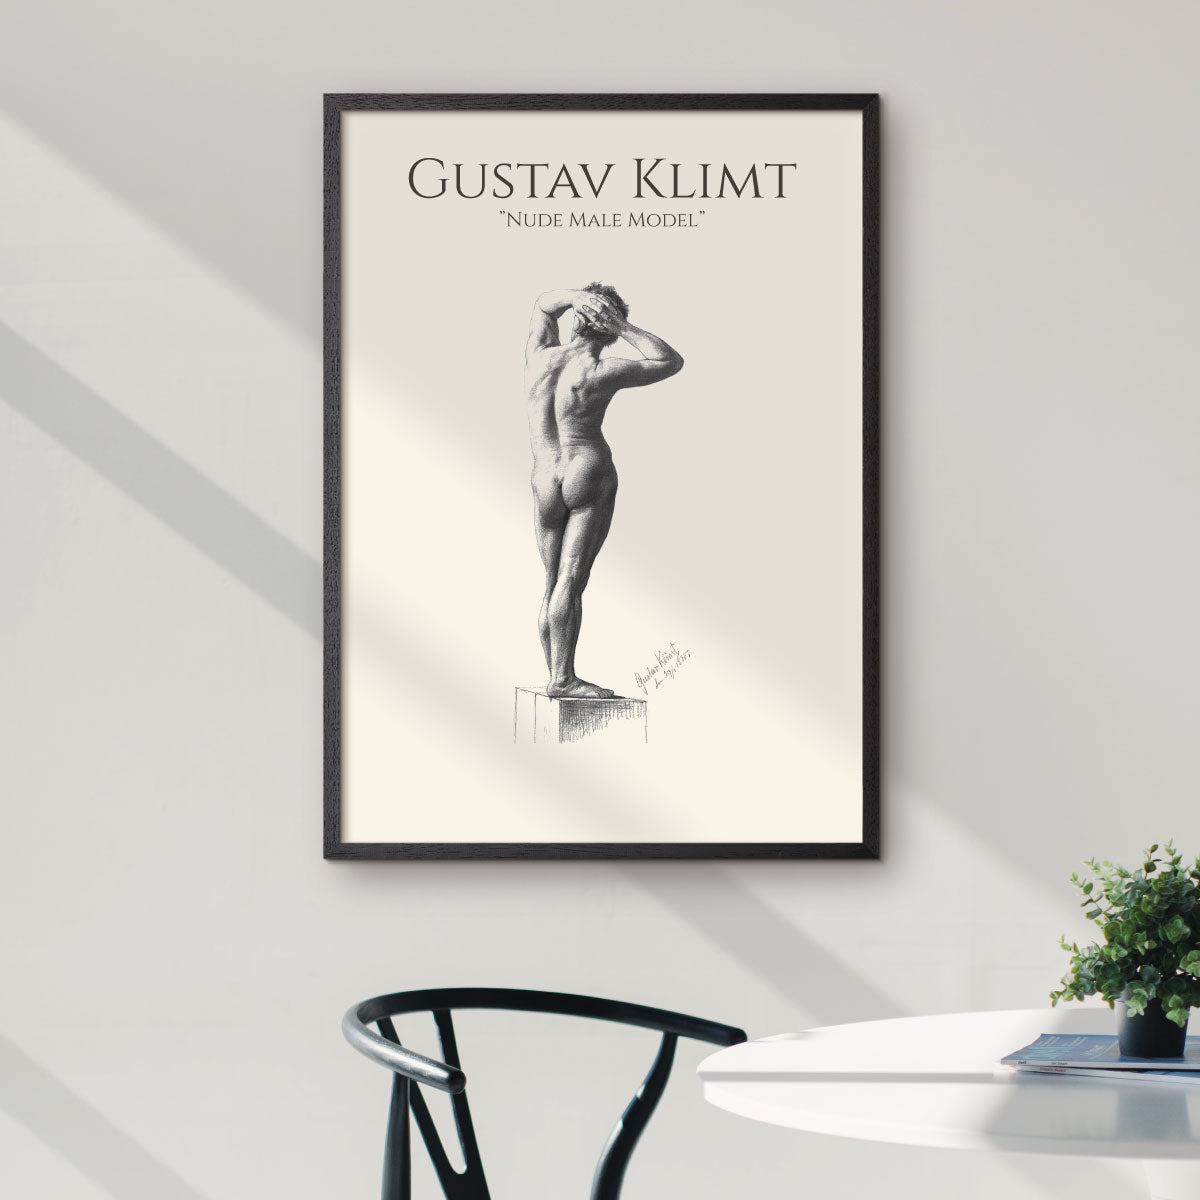 Art poster with Gustav Klimt sketch "Nude Male Model"